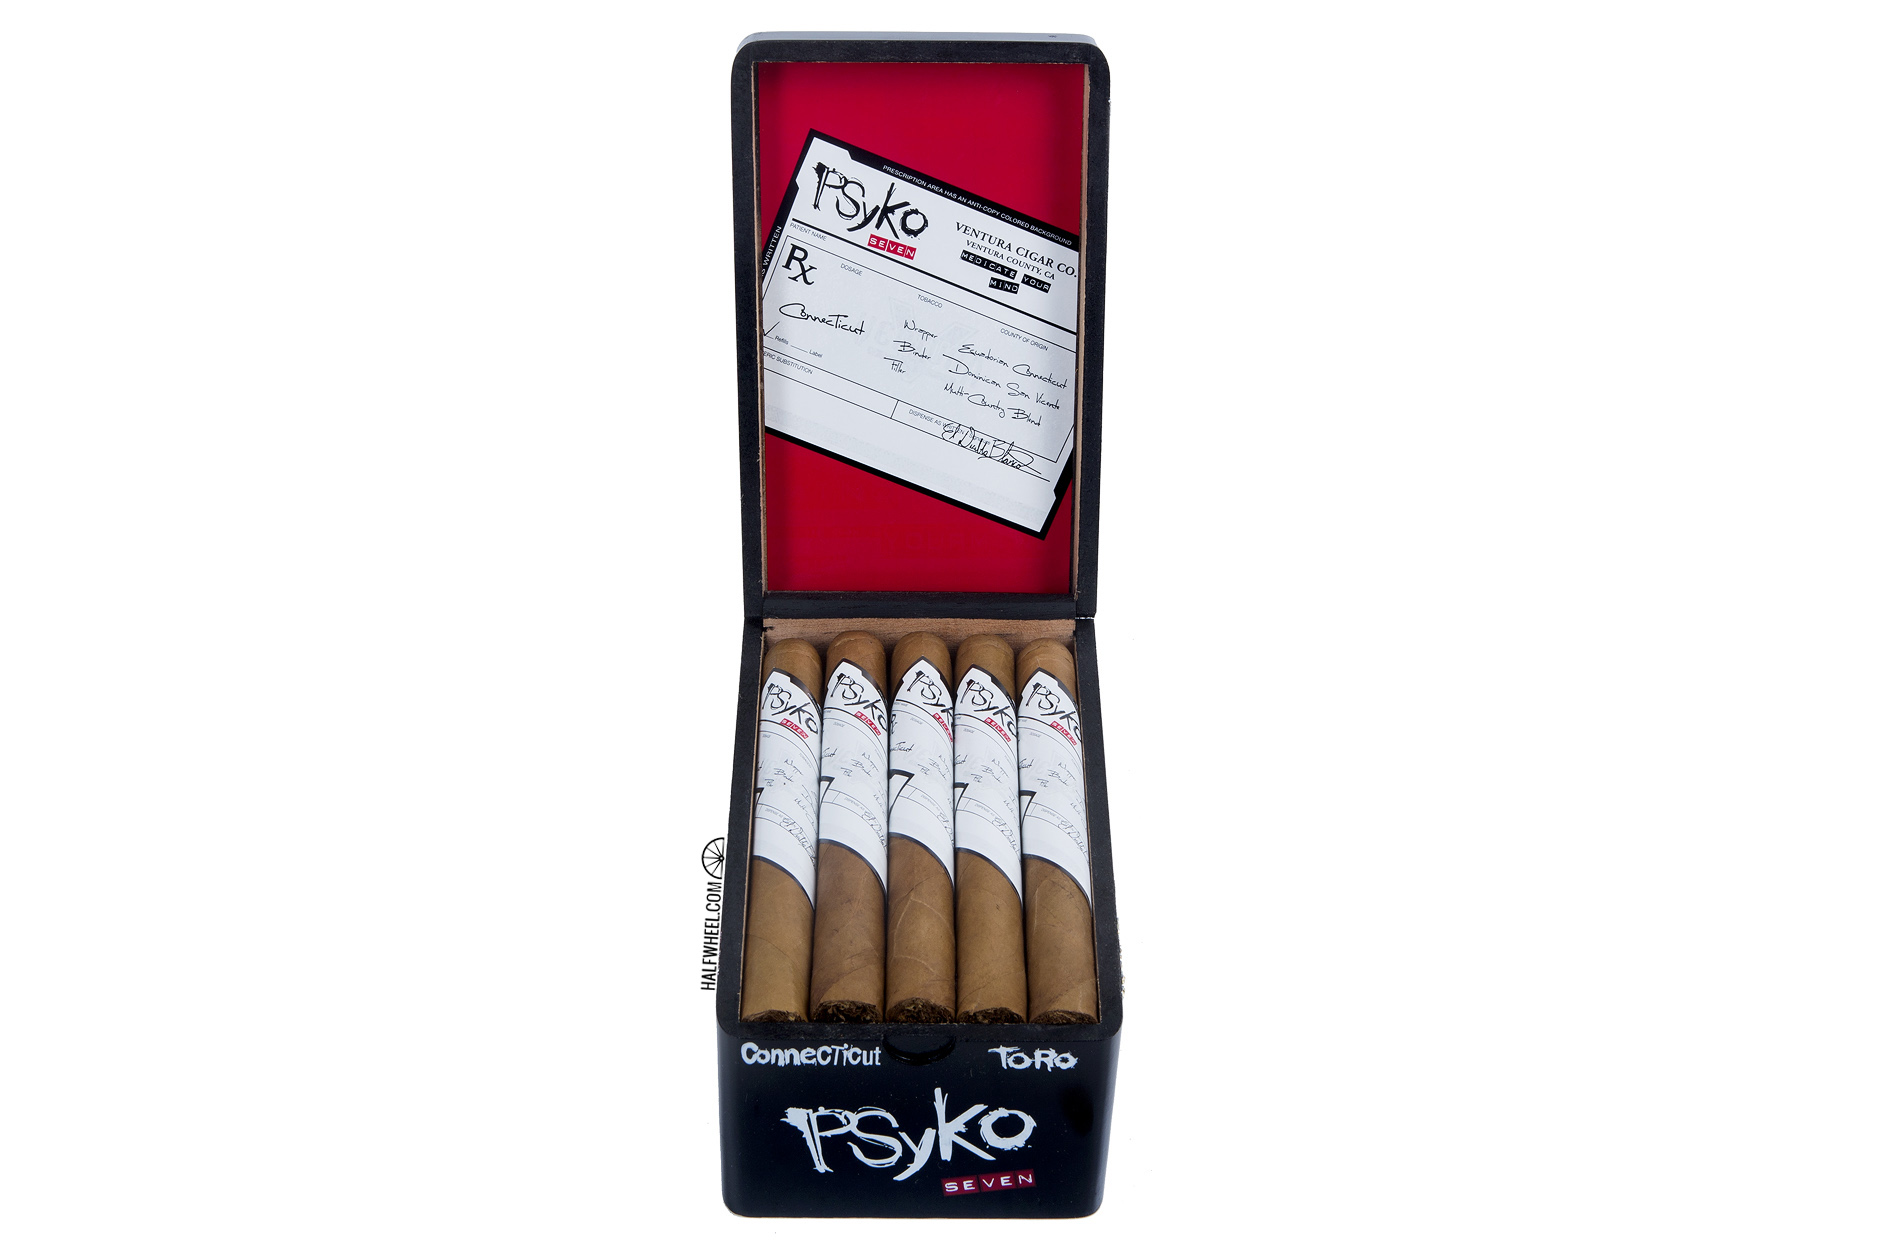 PSyKo Seven Connecticut Toro Box 2